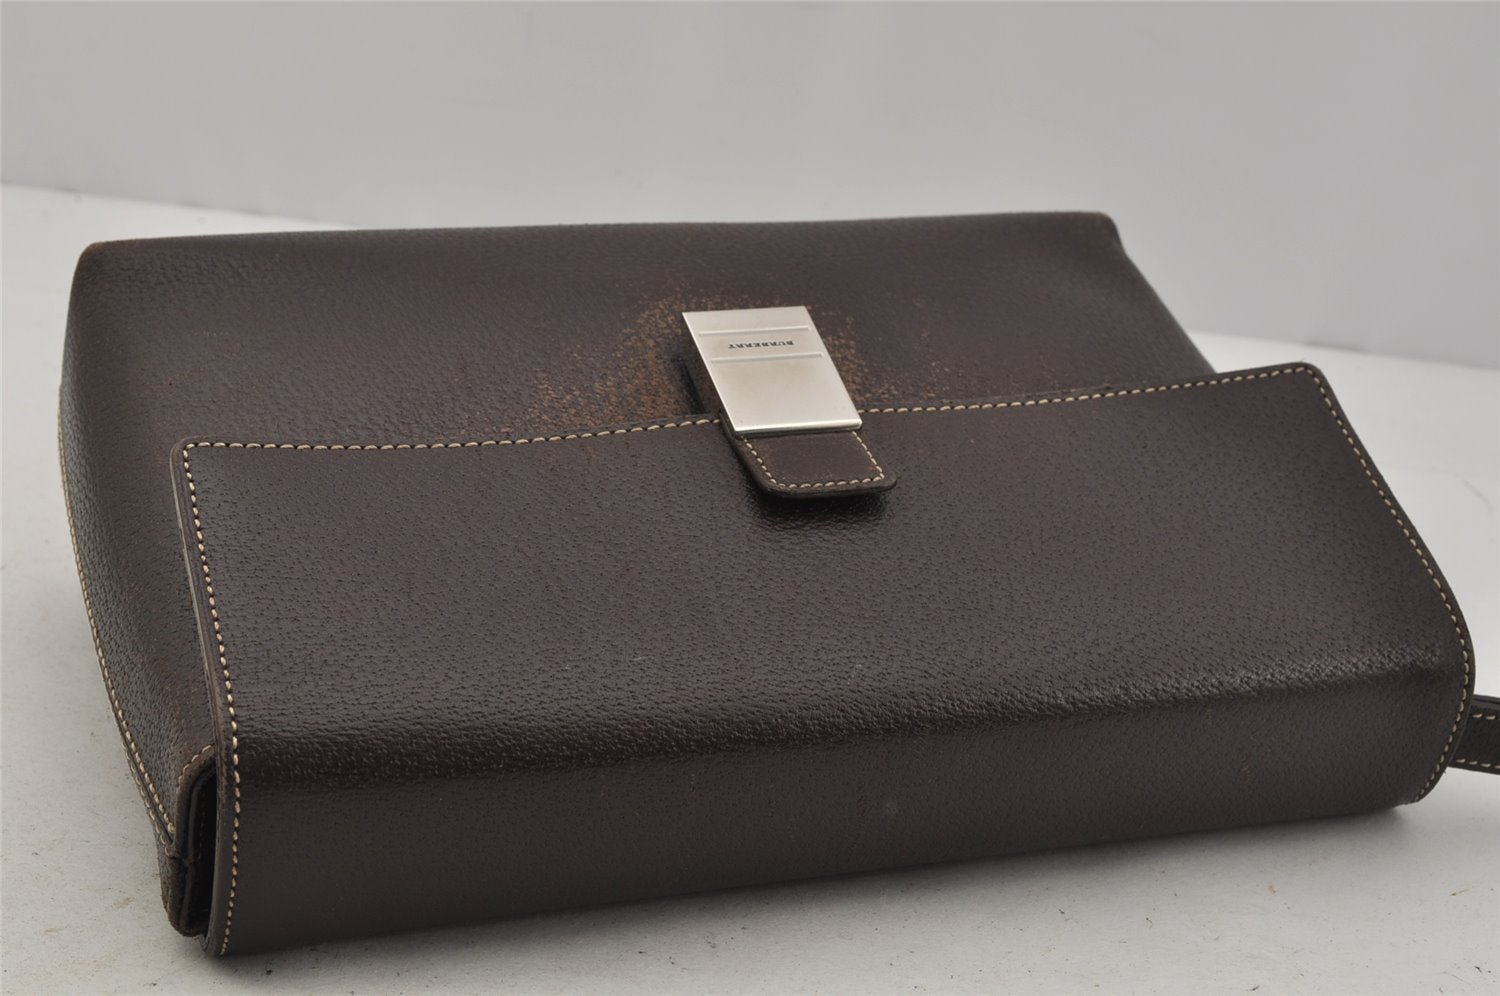 Authentic BURBERRY Vintage Leather Clutch Hand Bag Purse Brown 0867J